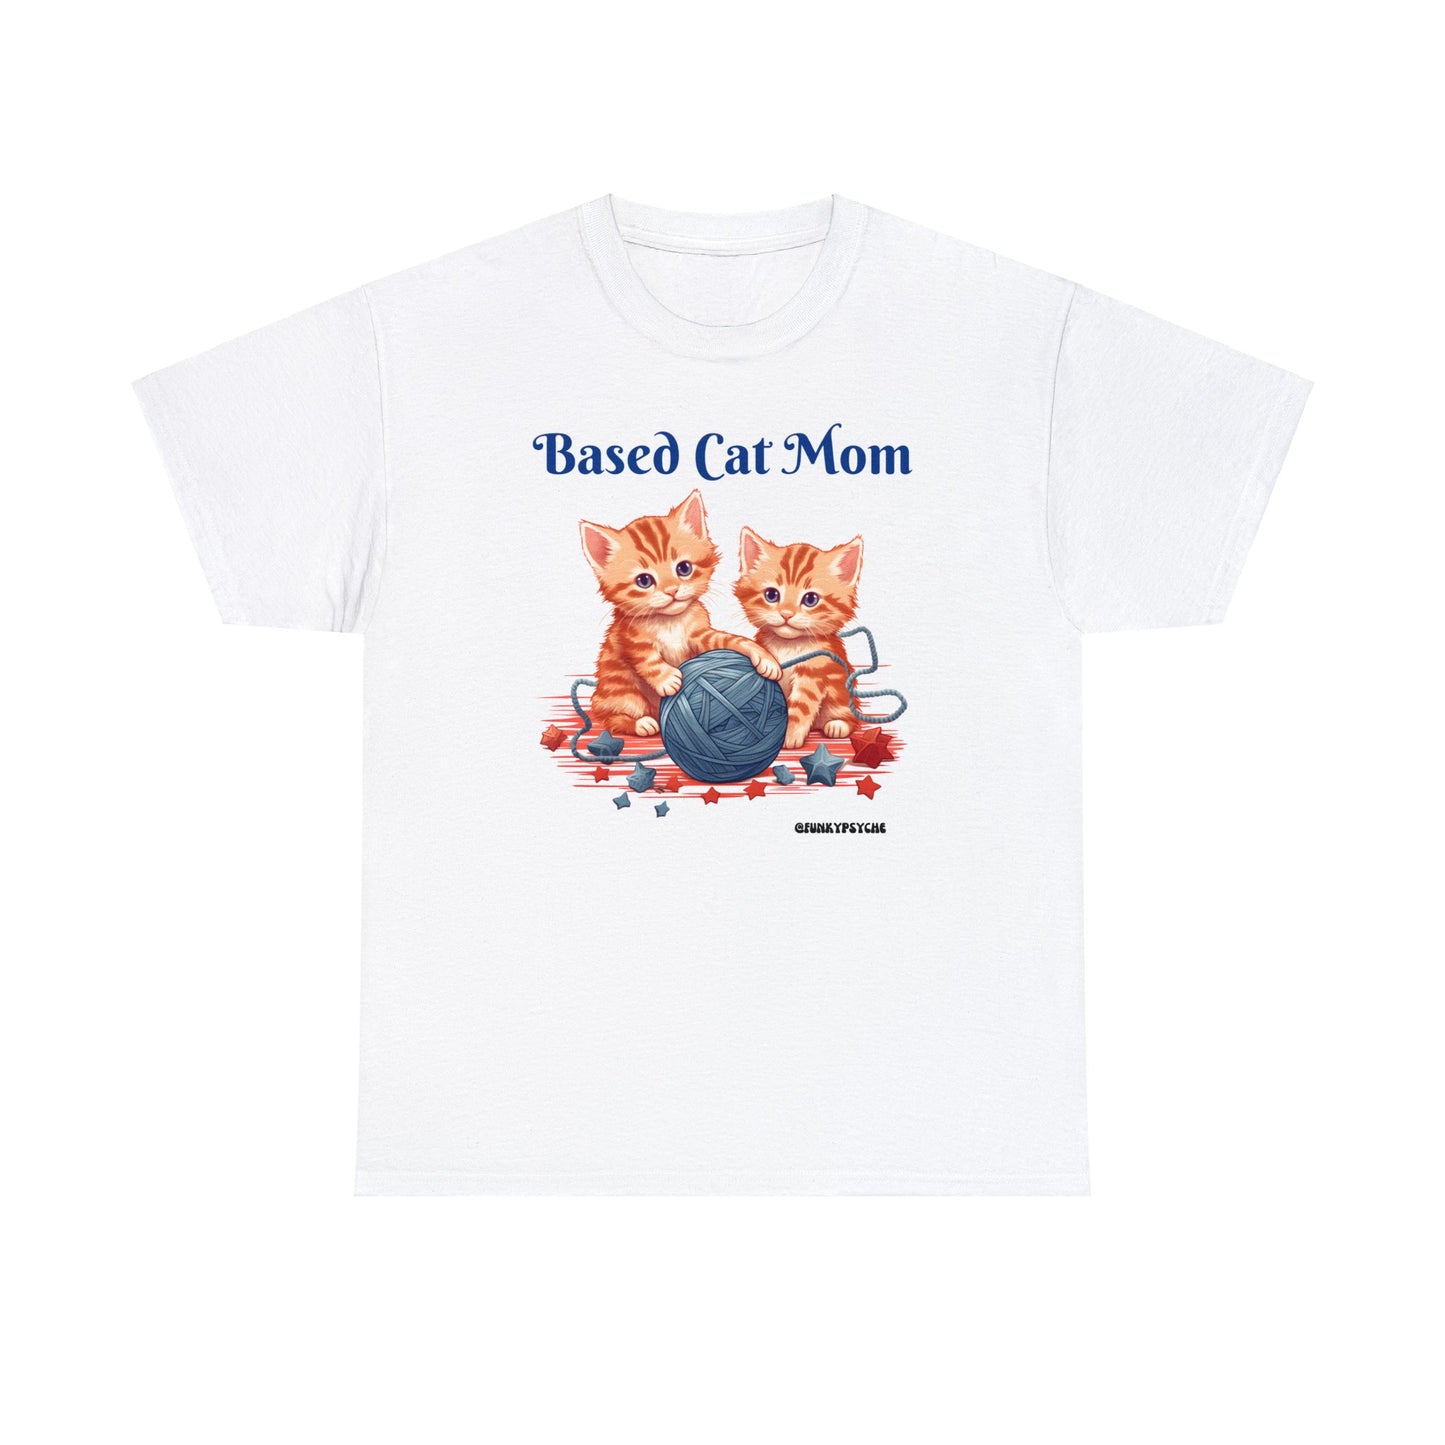 Based Cat Mom T-Shirt For Cat Lovers